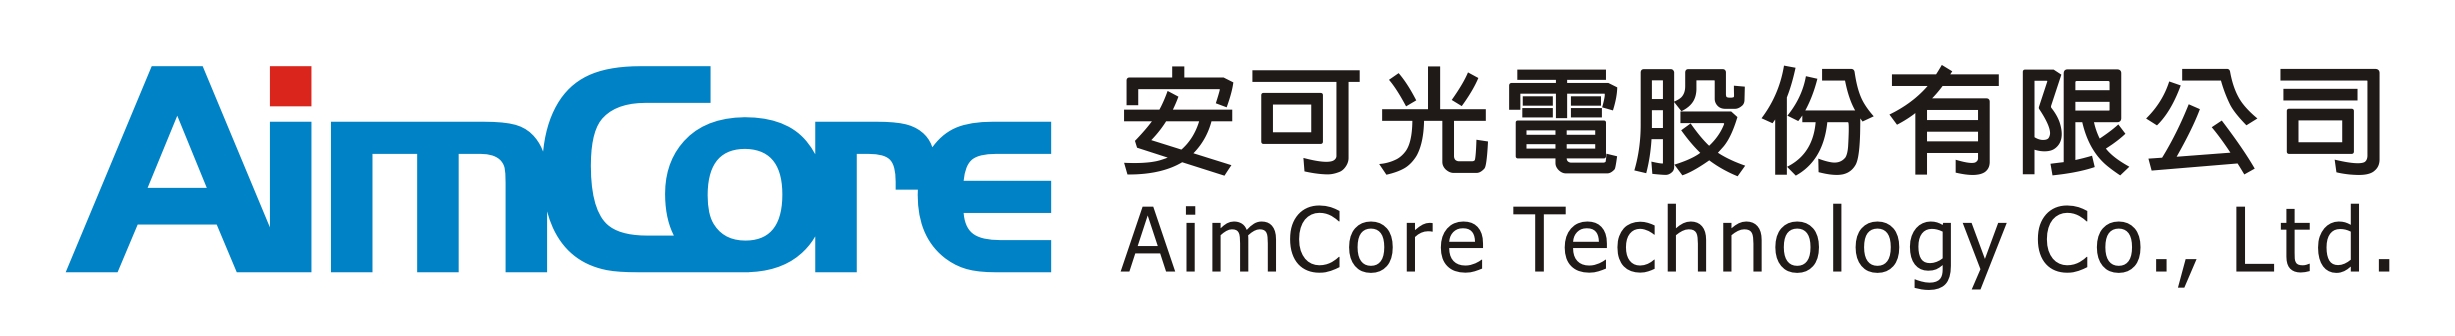 AimCore Technology Co., Ltd. 